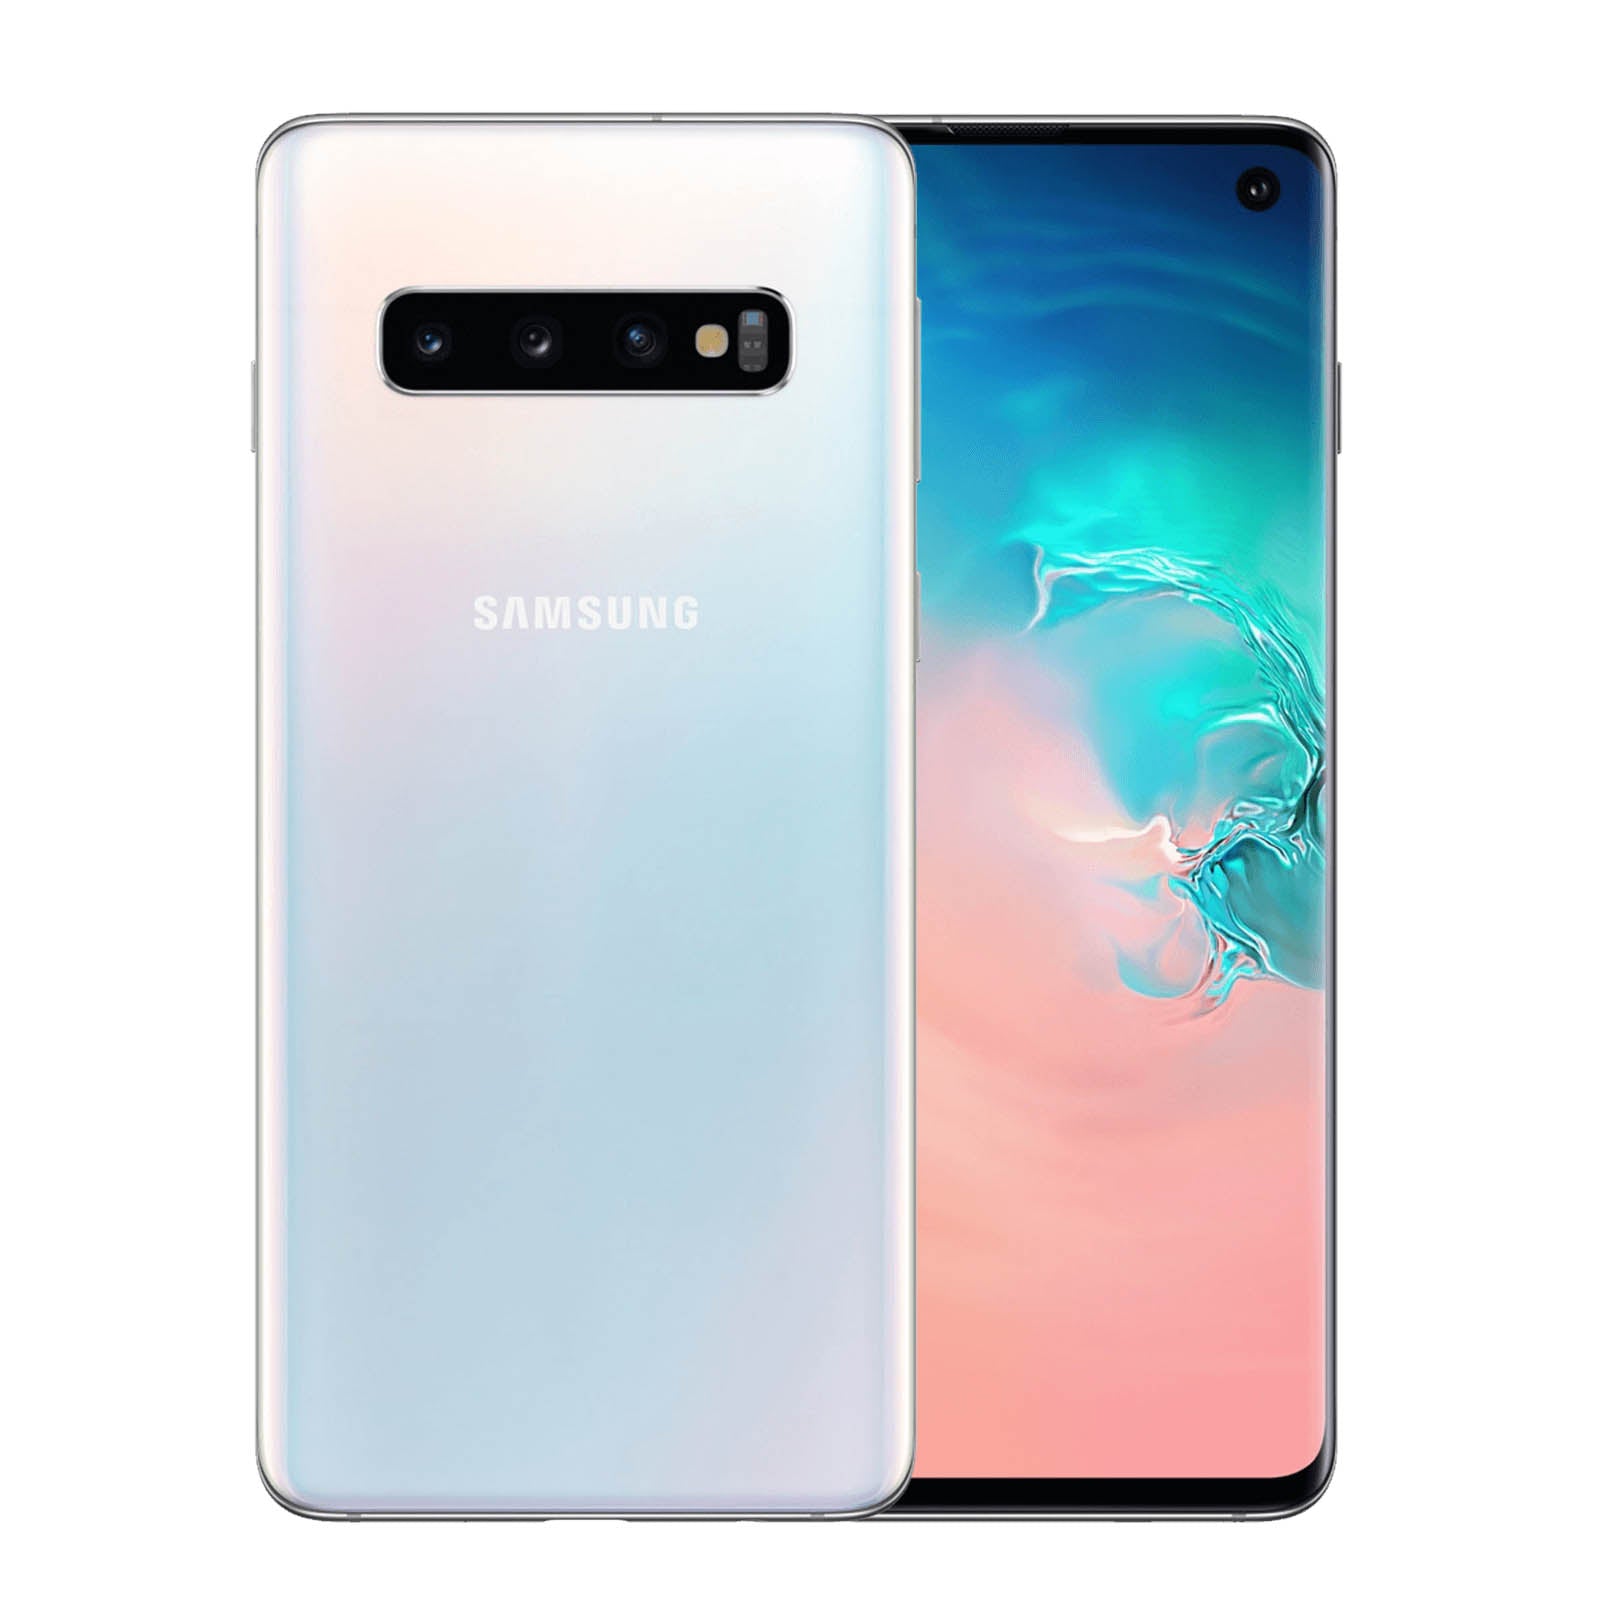 Samsung Galaxy S10 128GB Prism White Good - Unlocked